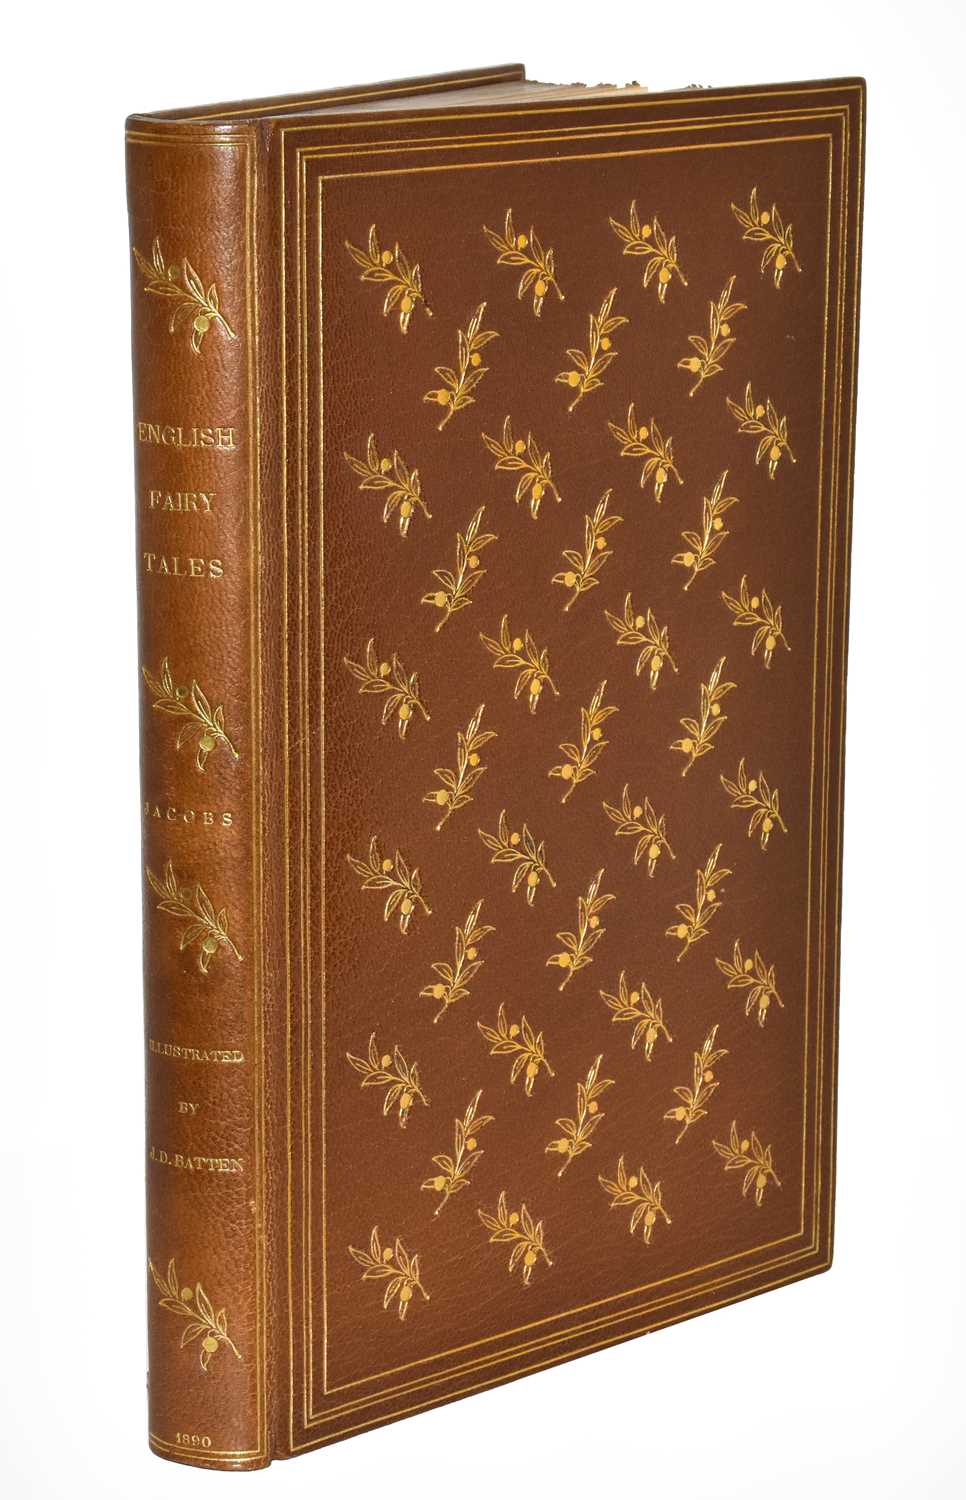 Jacobs (Joseph). English Fairy Tales. Illustrated by John D. Batten, London: David Nutt, 1890. Large